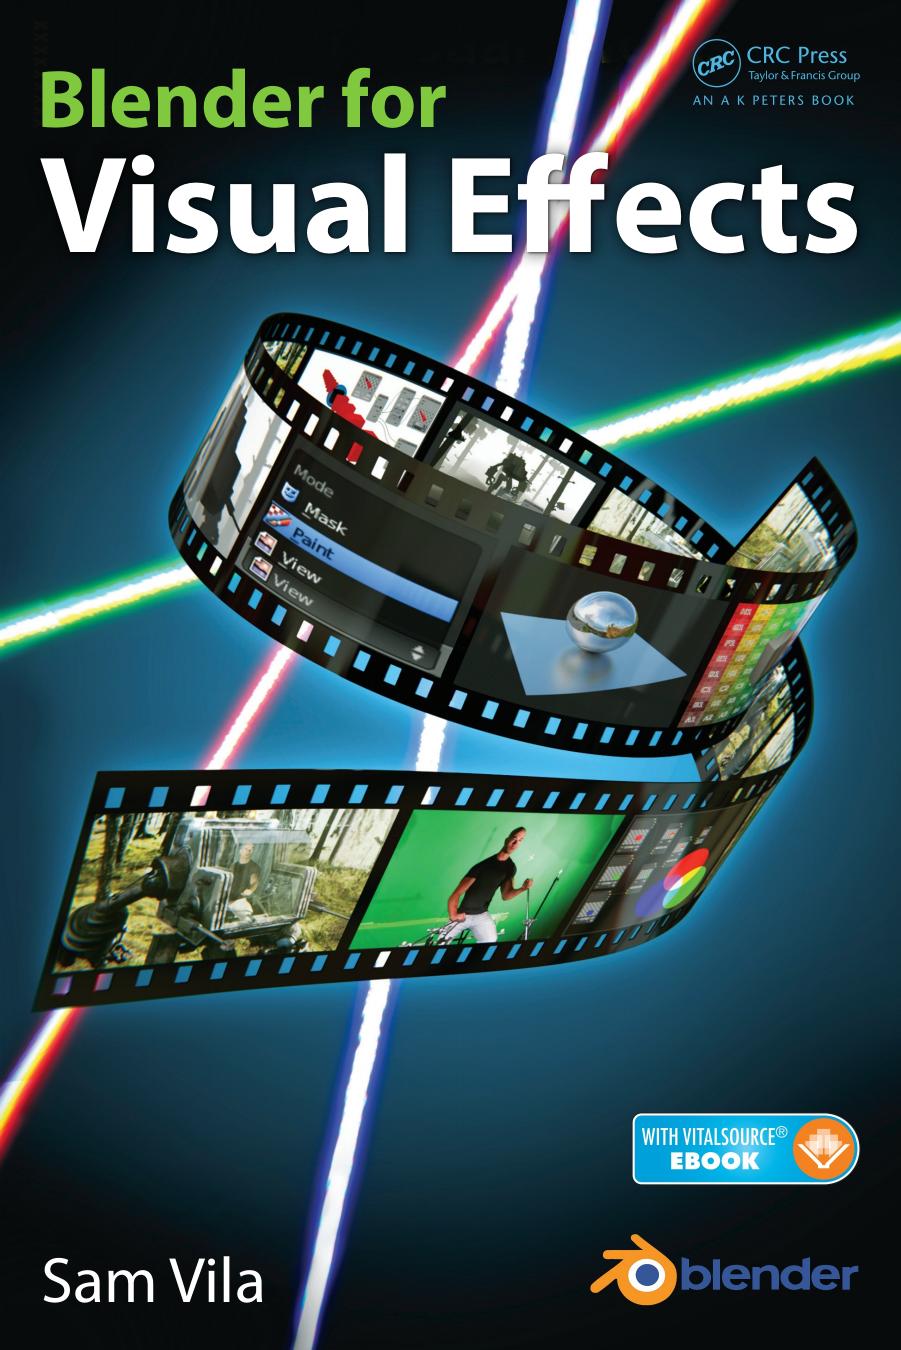 Blender for Visual Effects by Sam Vila